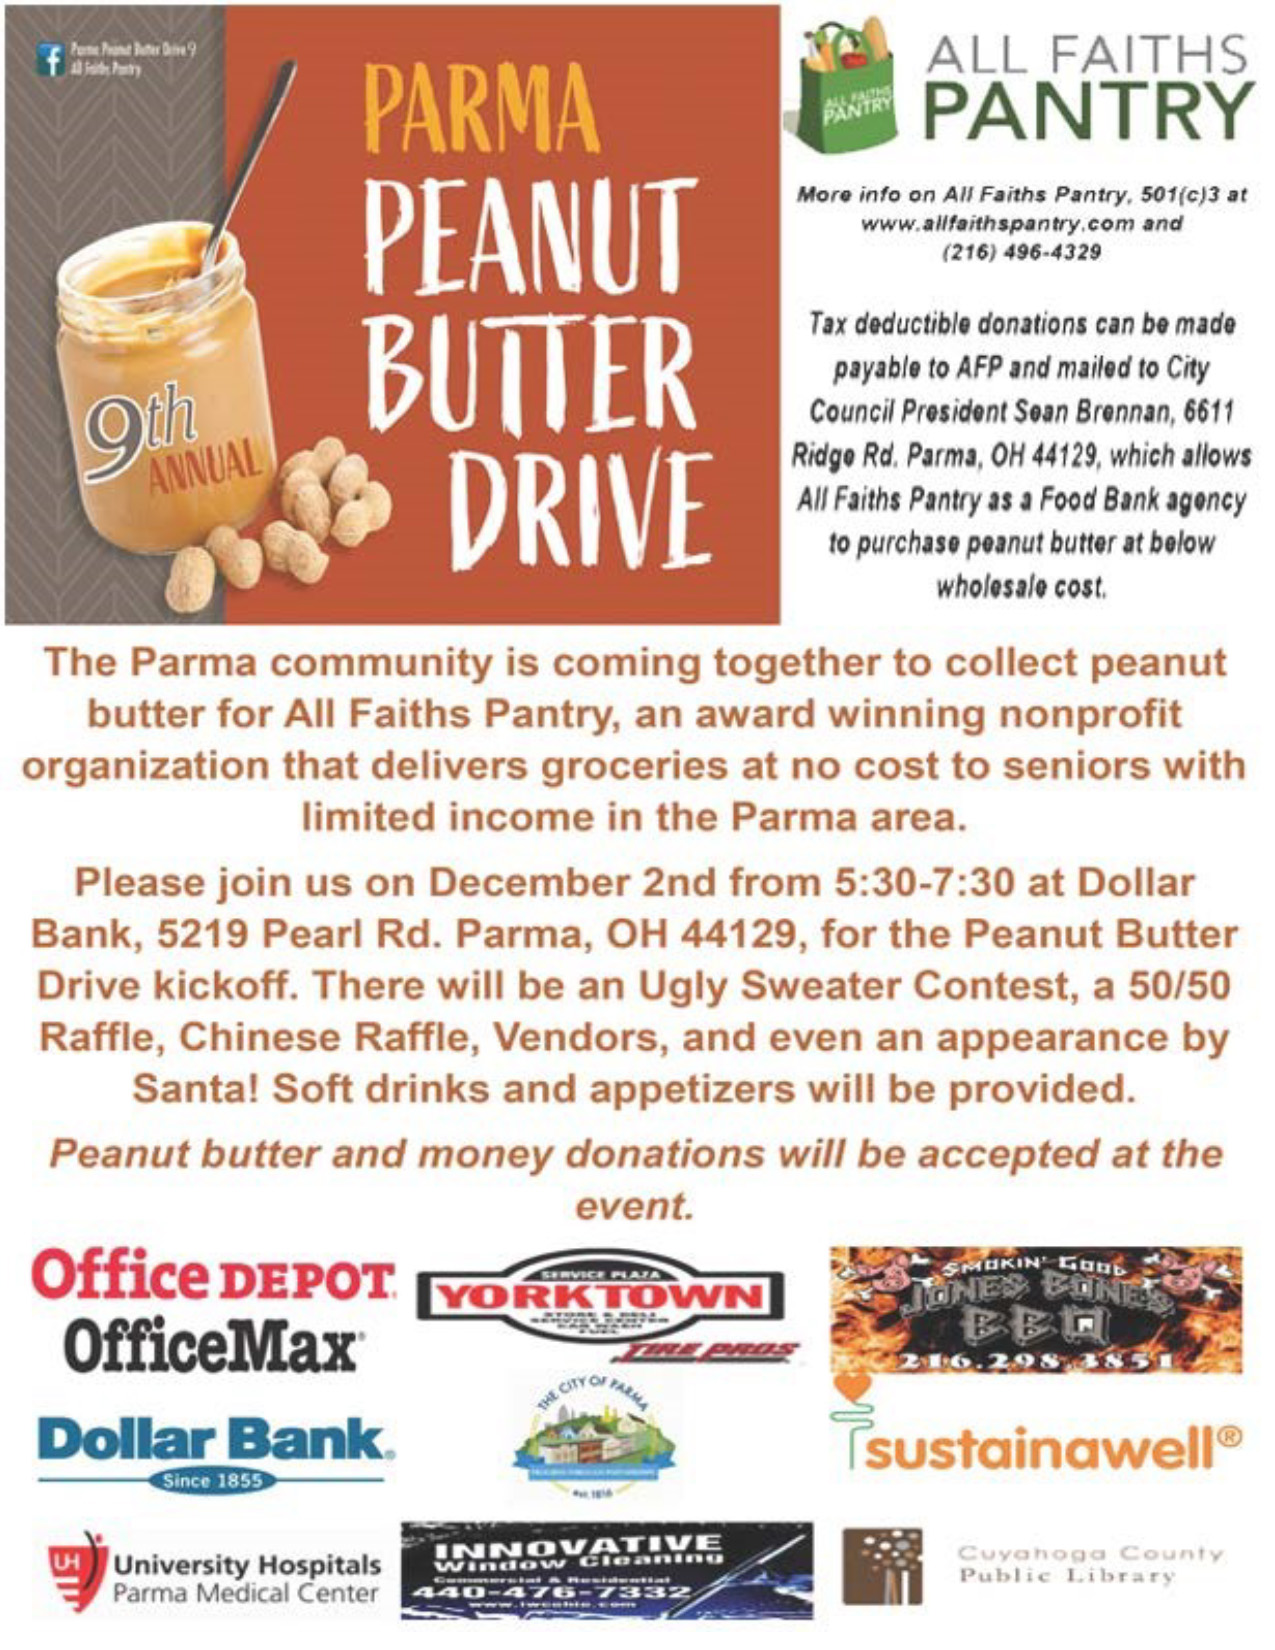 Parma Peanut Butter Drive Event